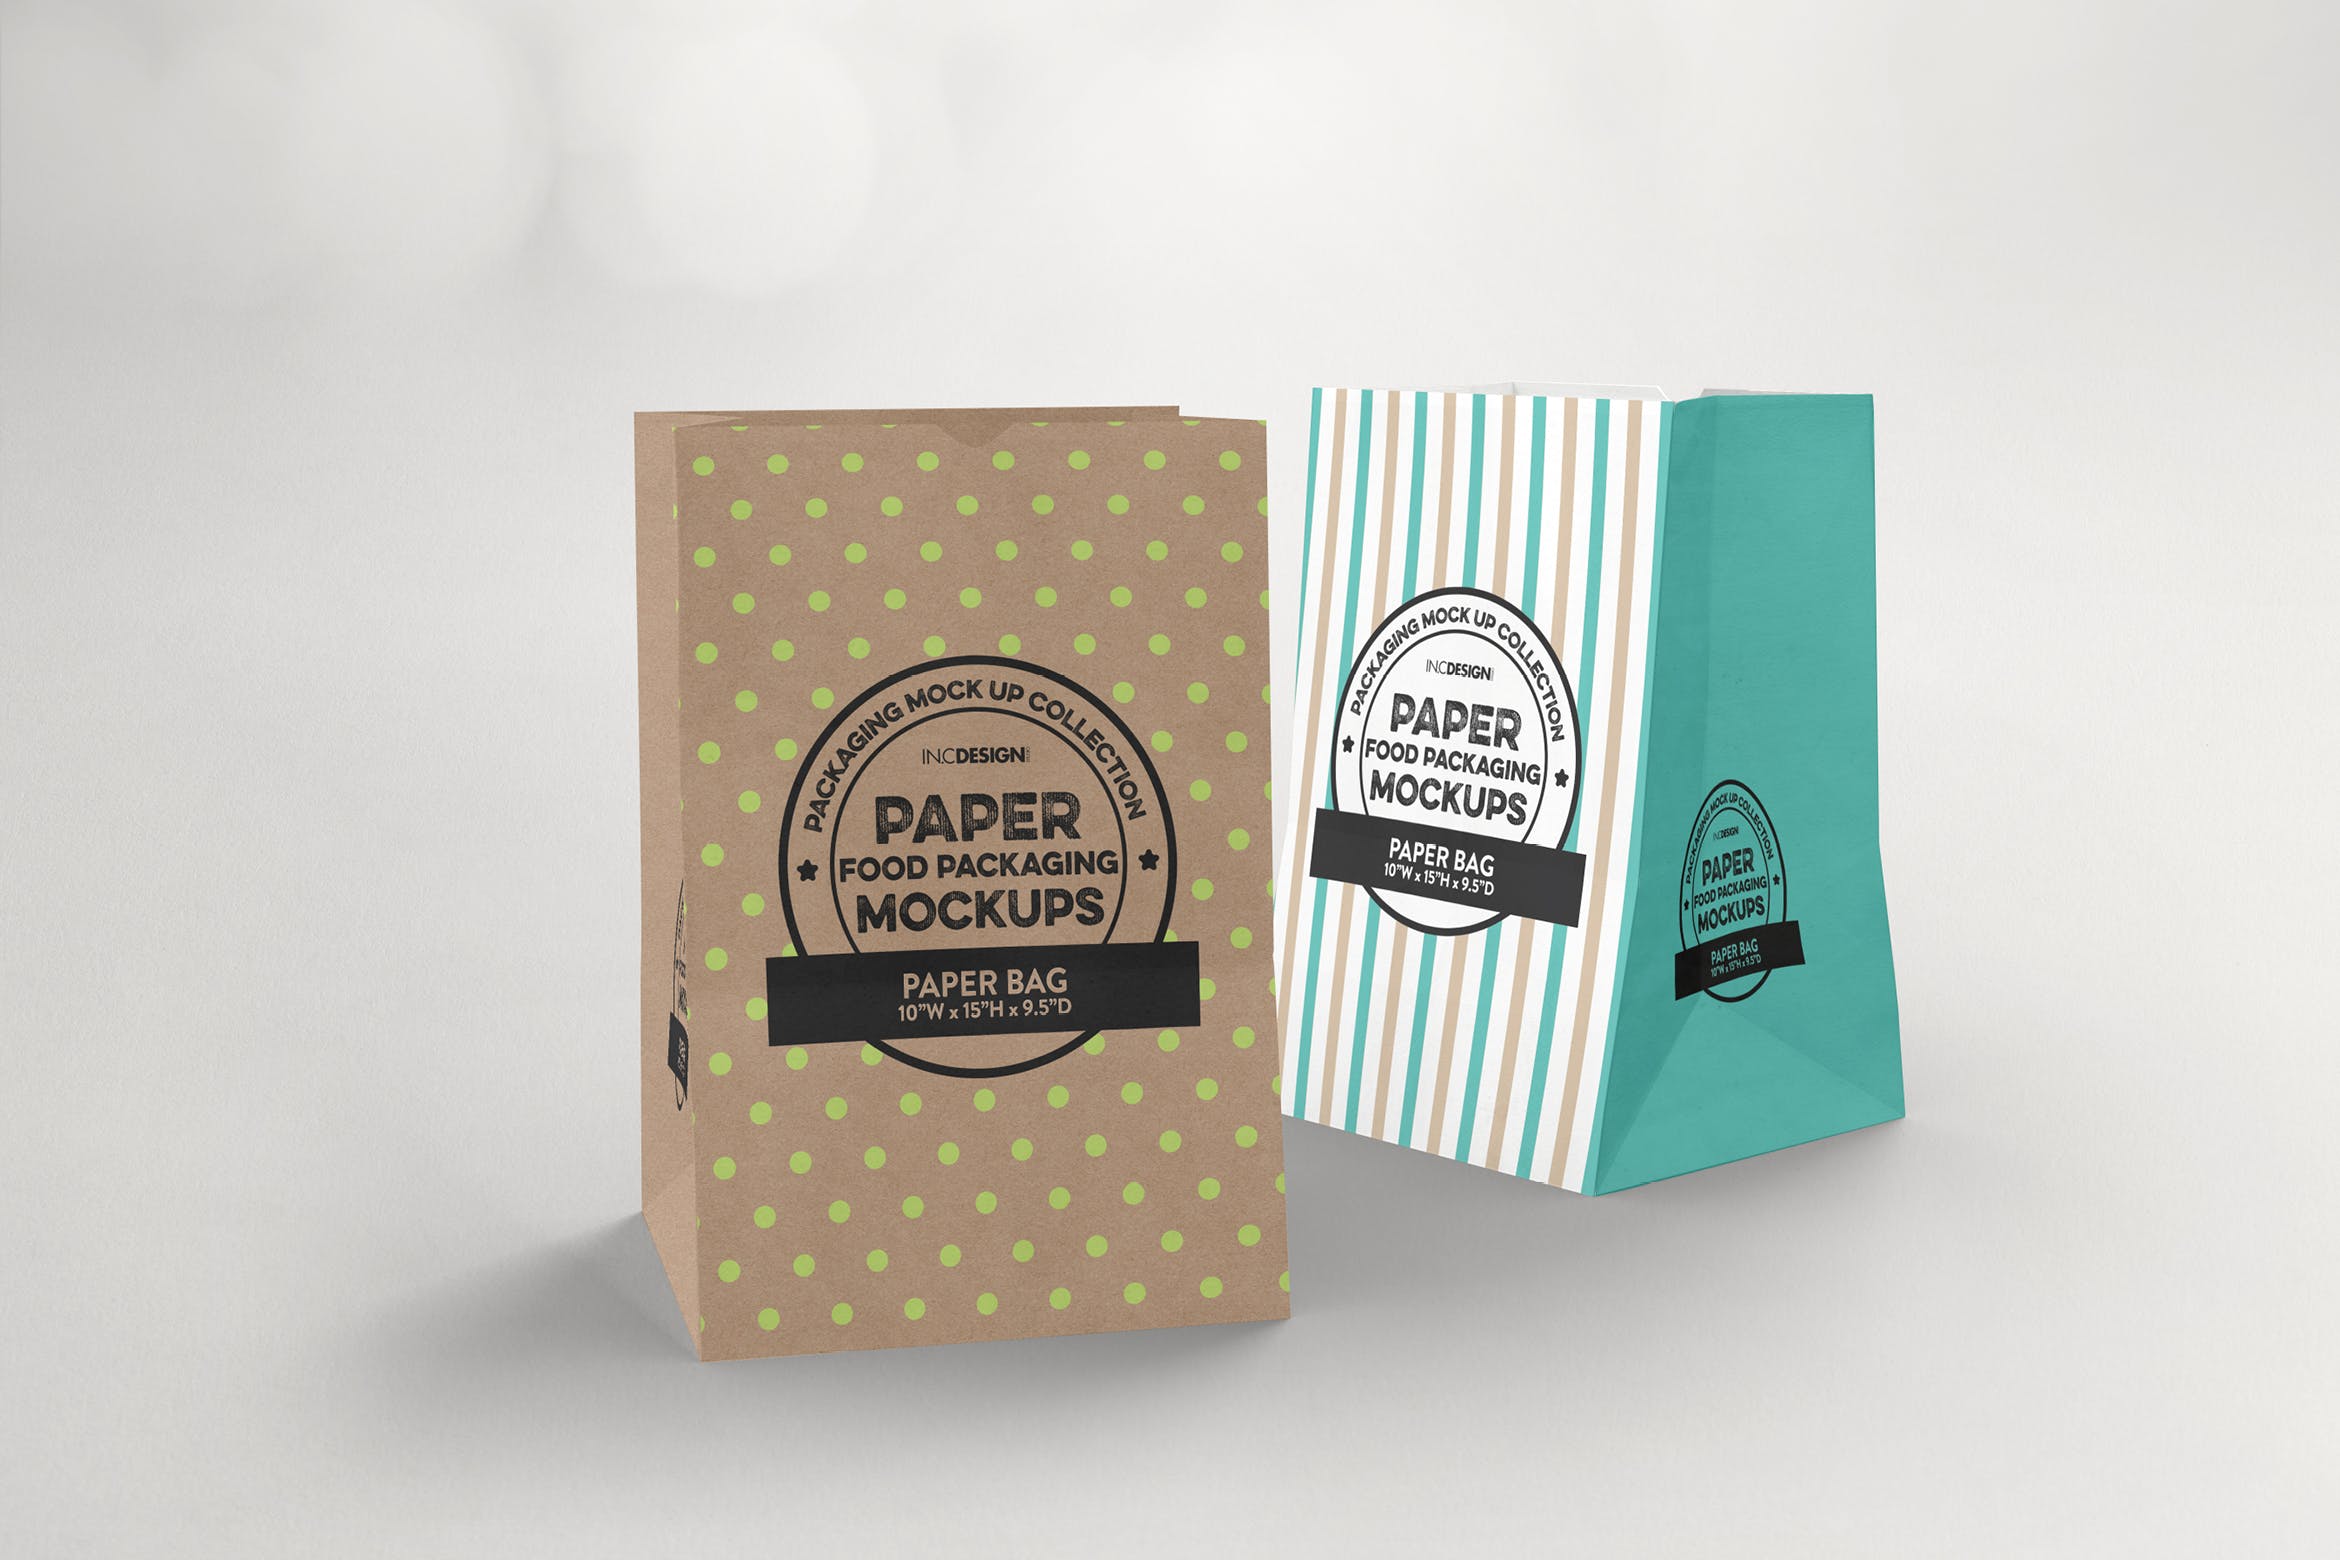 杂货纸袋包装设计效果图普贤居精选 Grocery Paper Bags Packaging Mockup插图